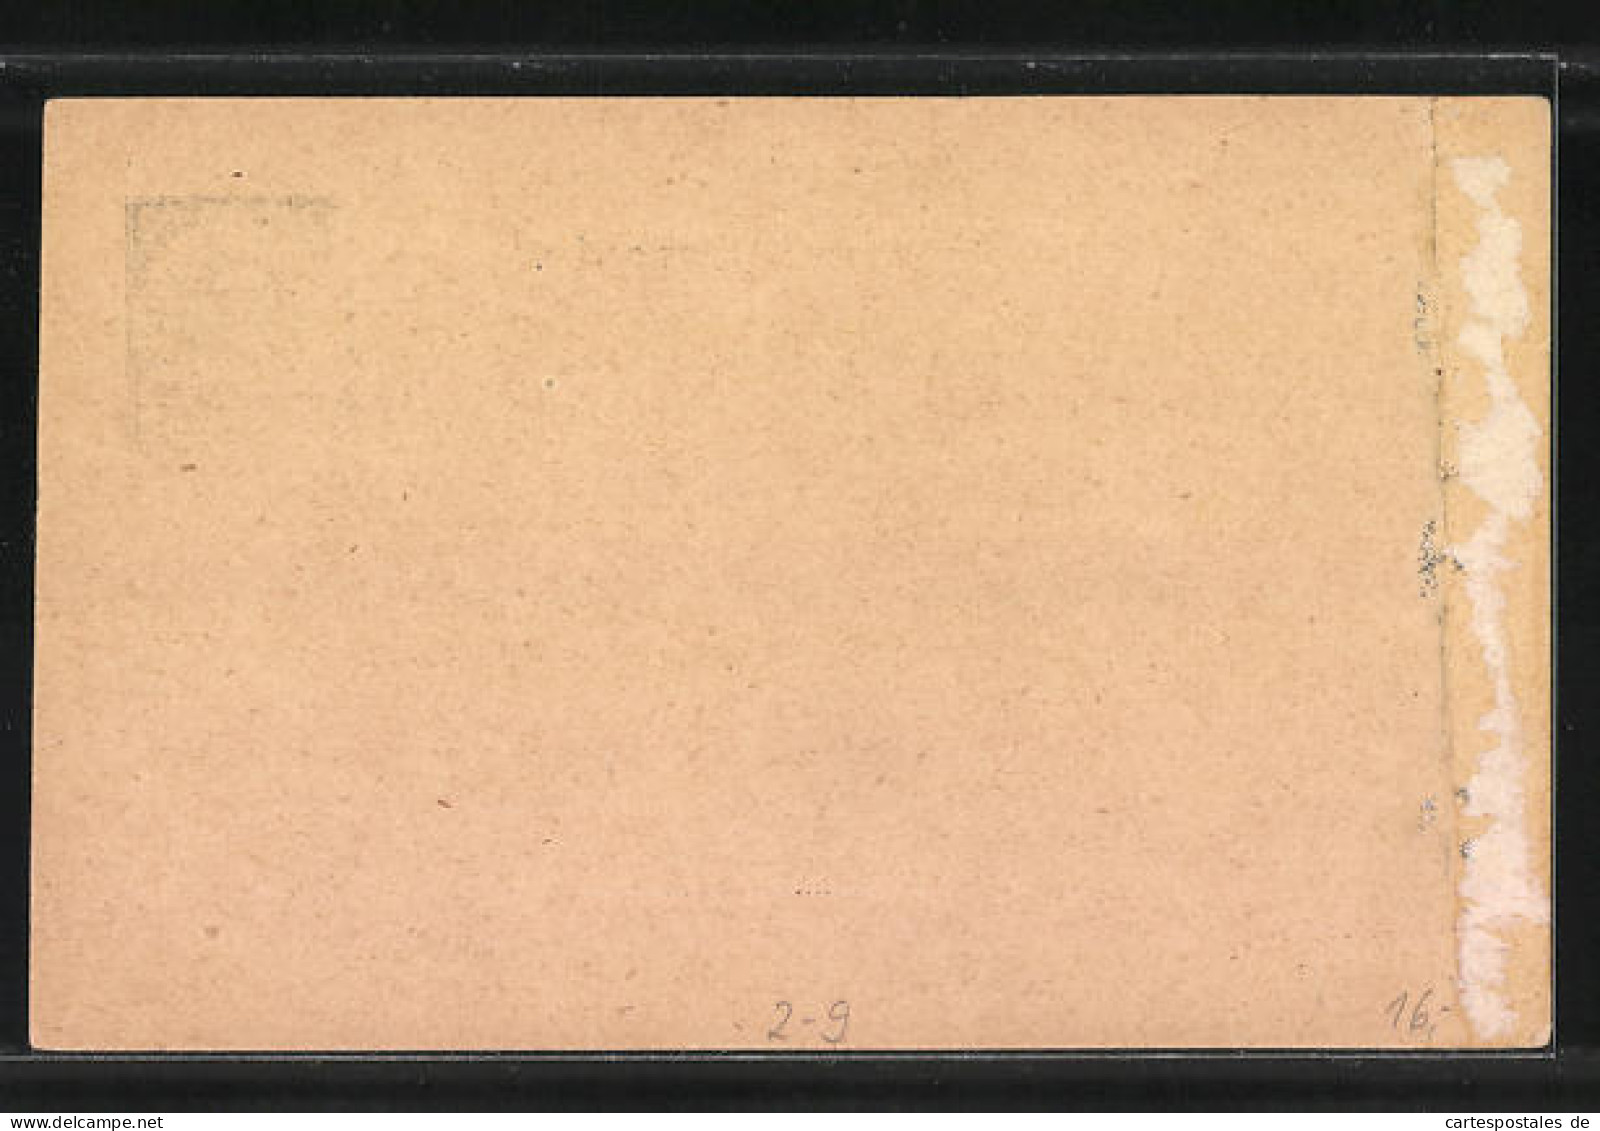 AK Briefkarte Briefbeförderung Hammonia, Private Stadtpost Hamburg, 2 Pfg.  - Timbres (représentations)